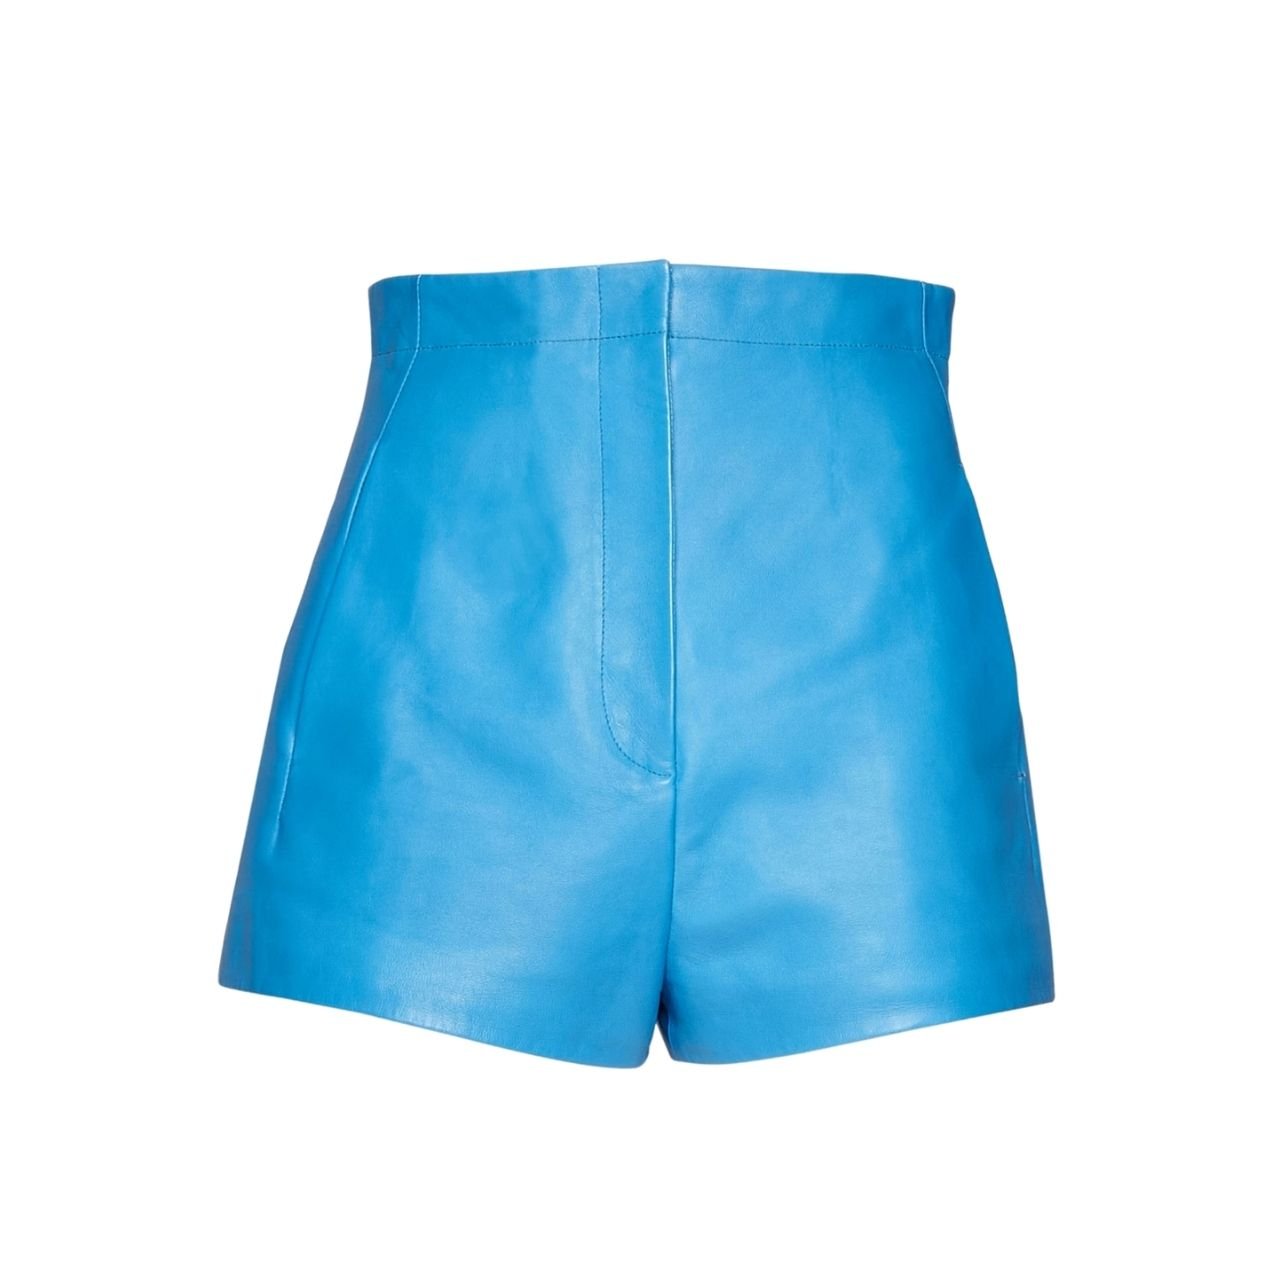 Salvatore Ferragamo blue leather shorts